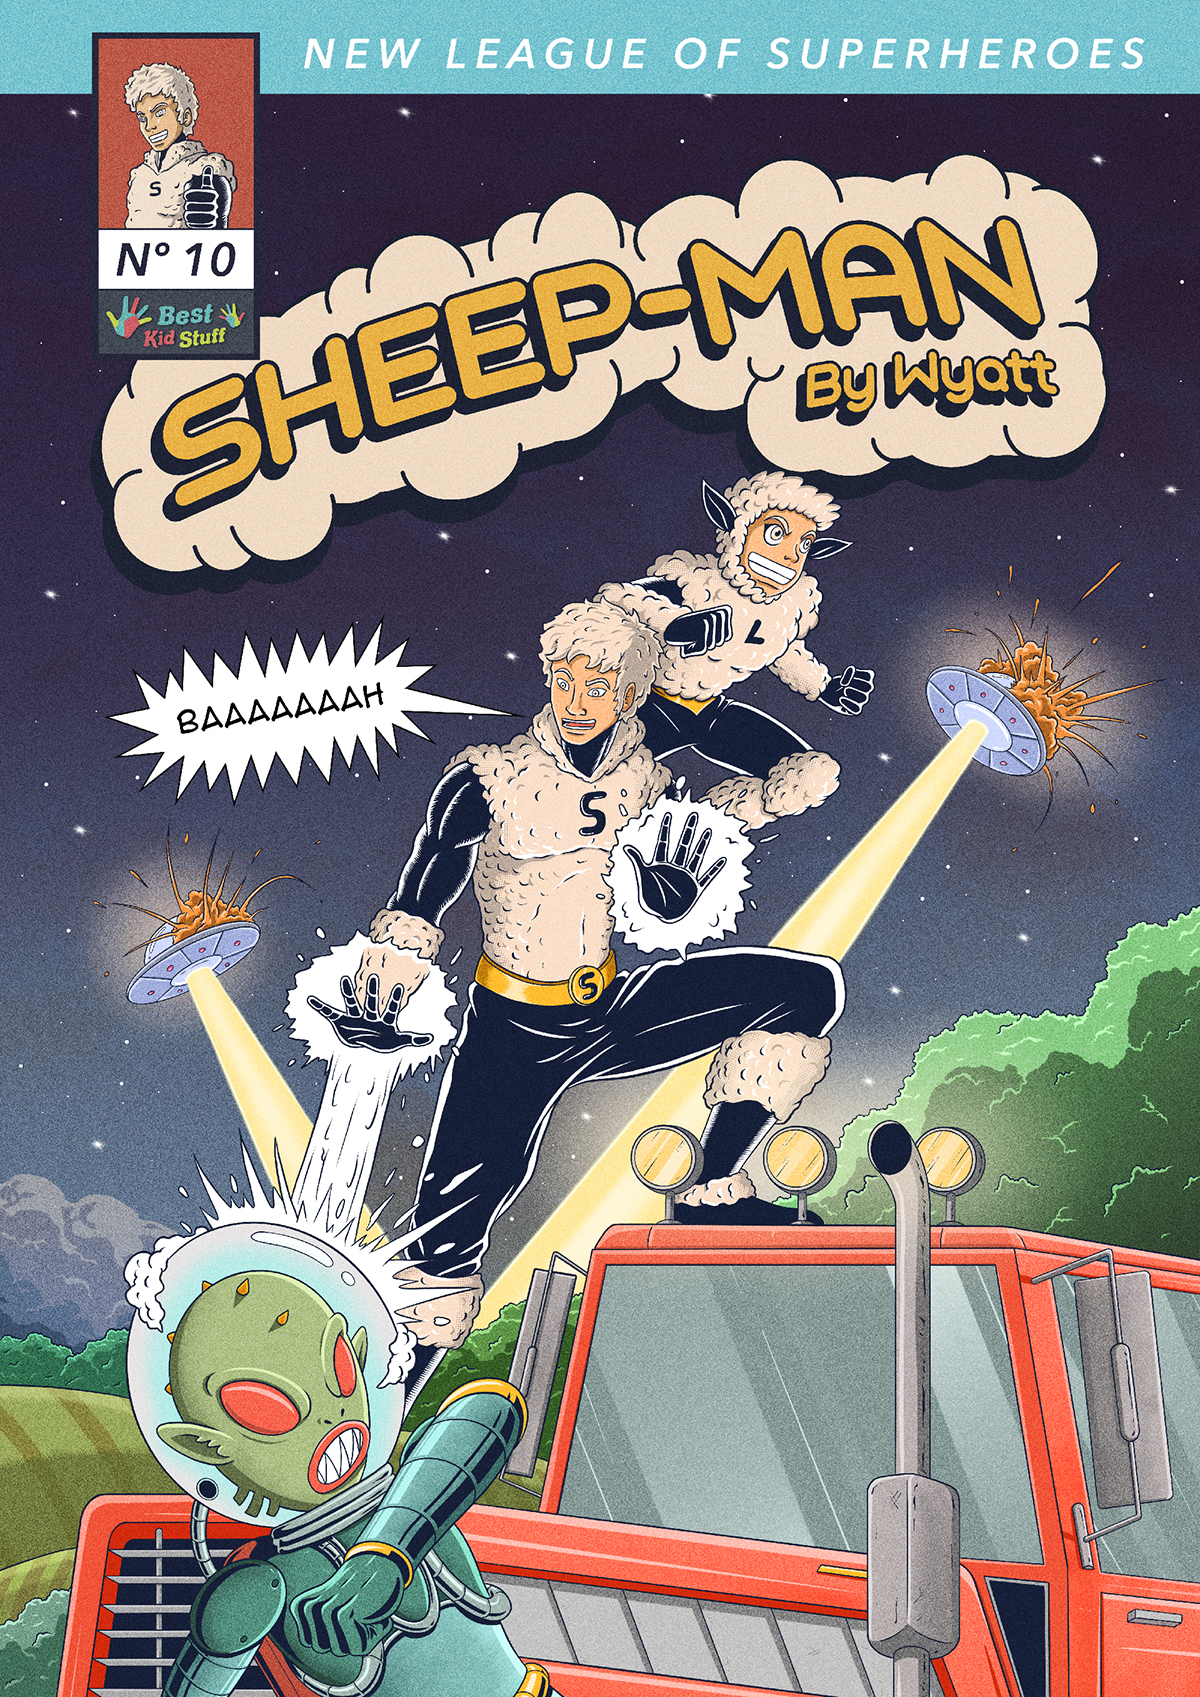 10 New League of Superheroes Sheep Man